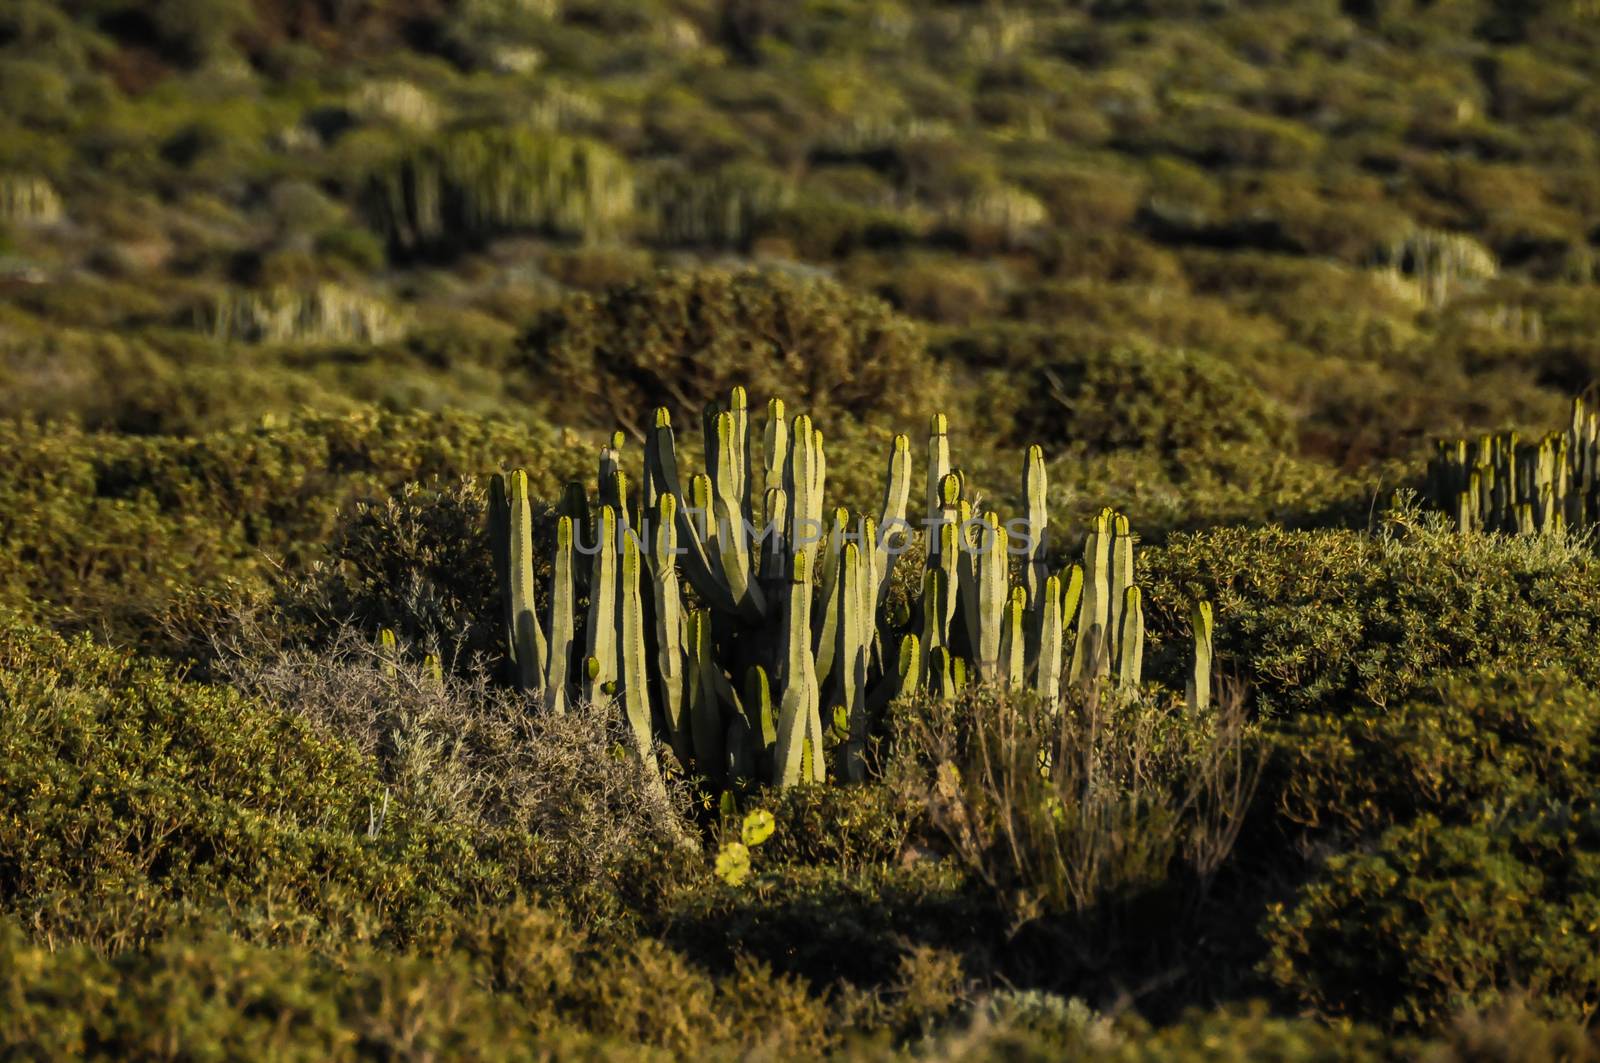 Cactus in the Desert by underworld